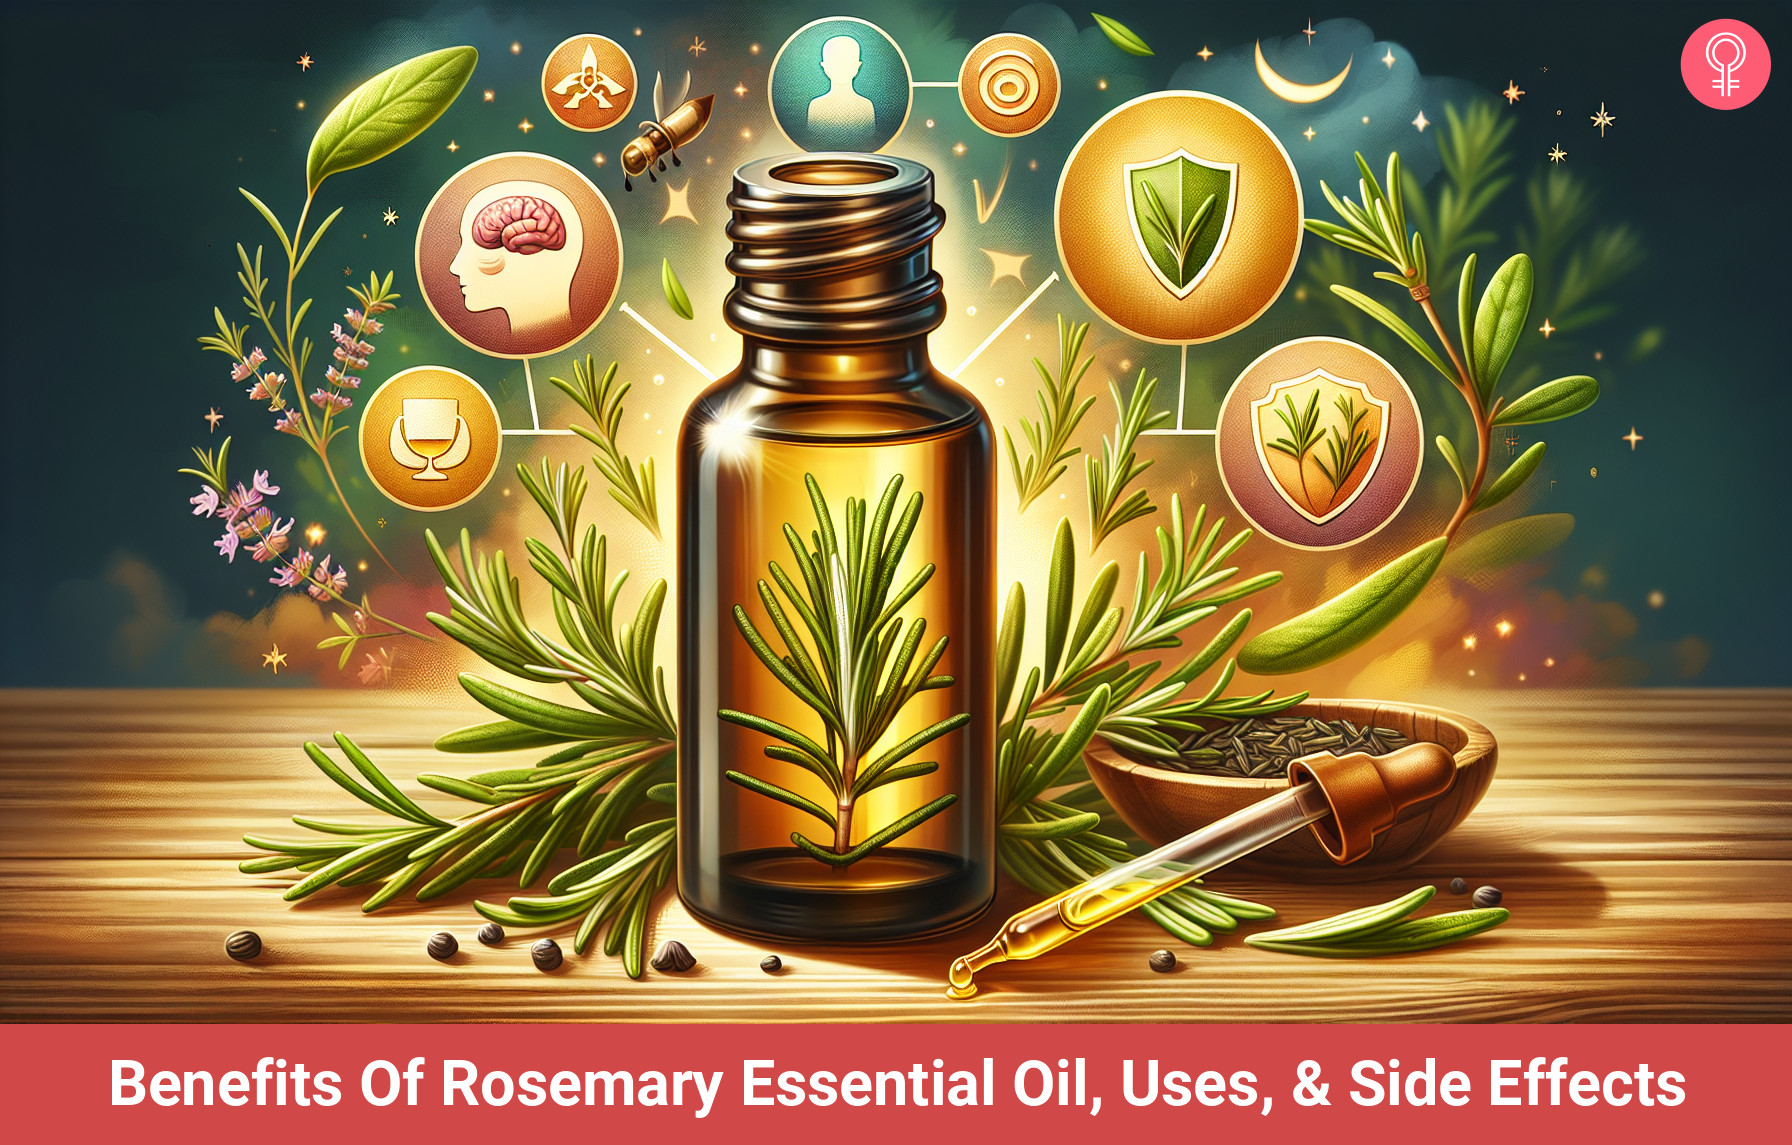 rosemary essential oil benefits_illustration